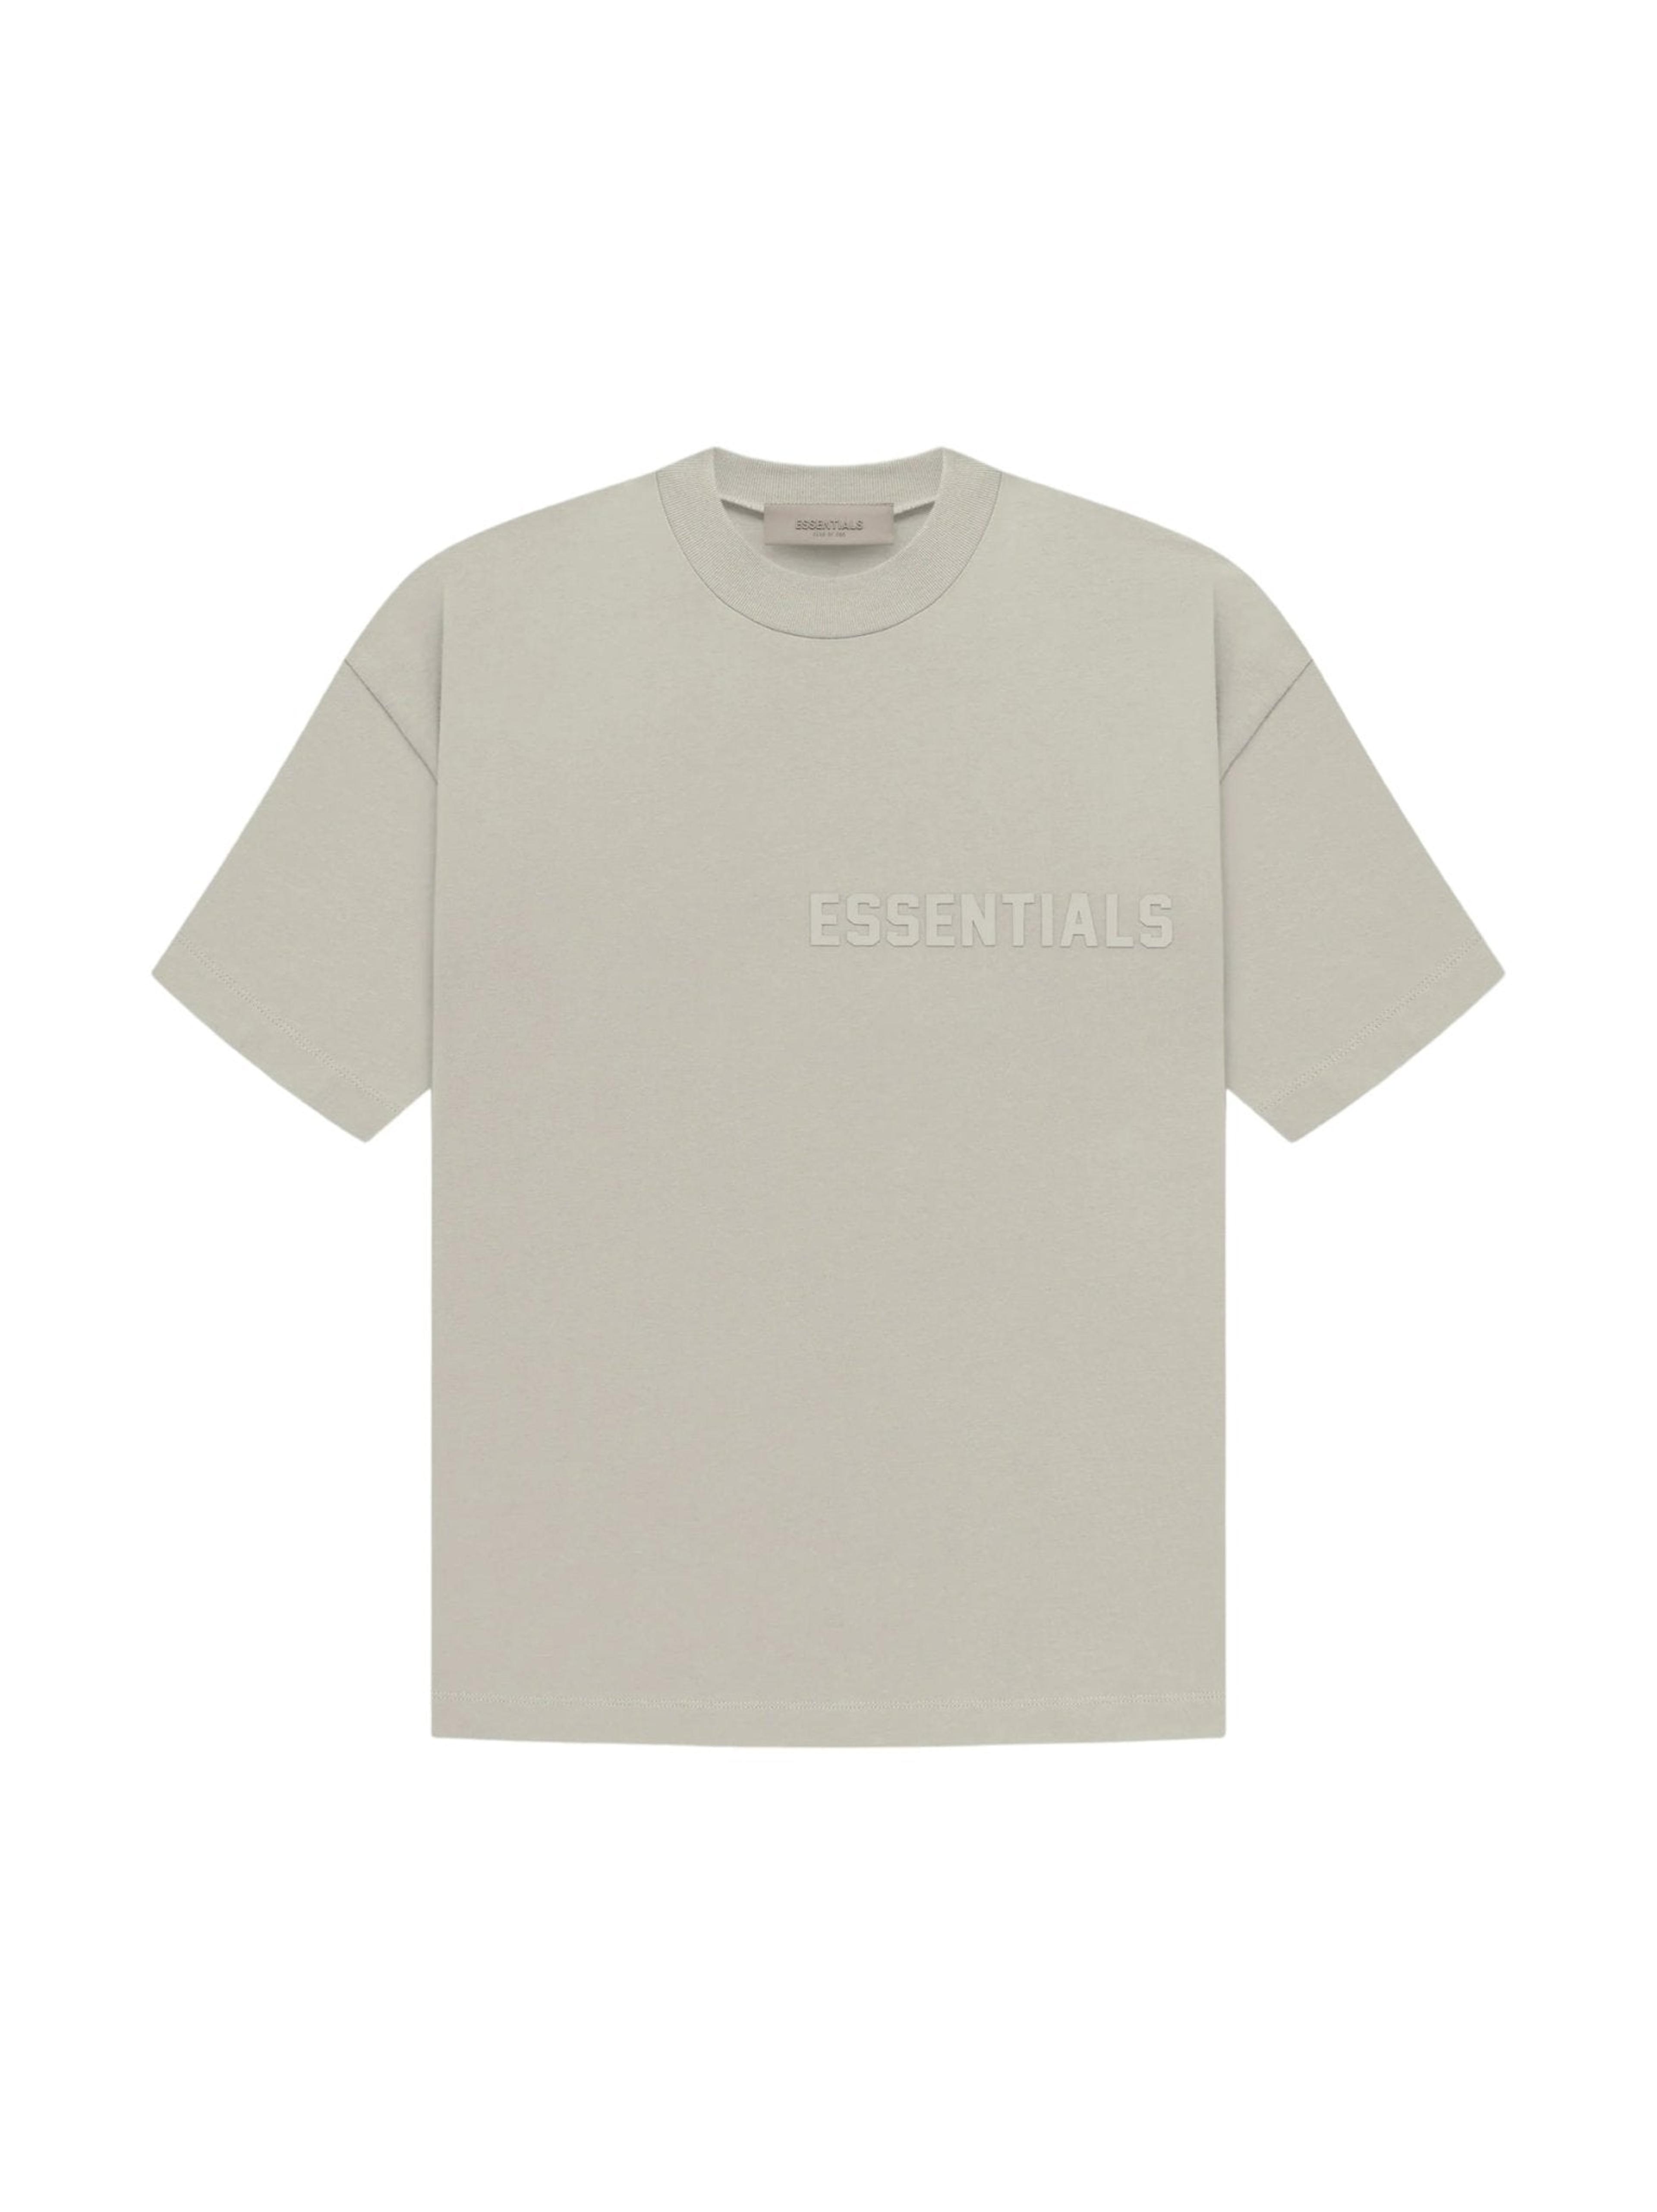 Fear of God Essentials T-shirt Seal